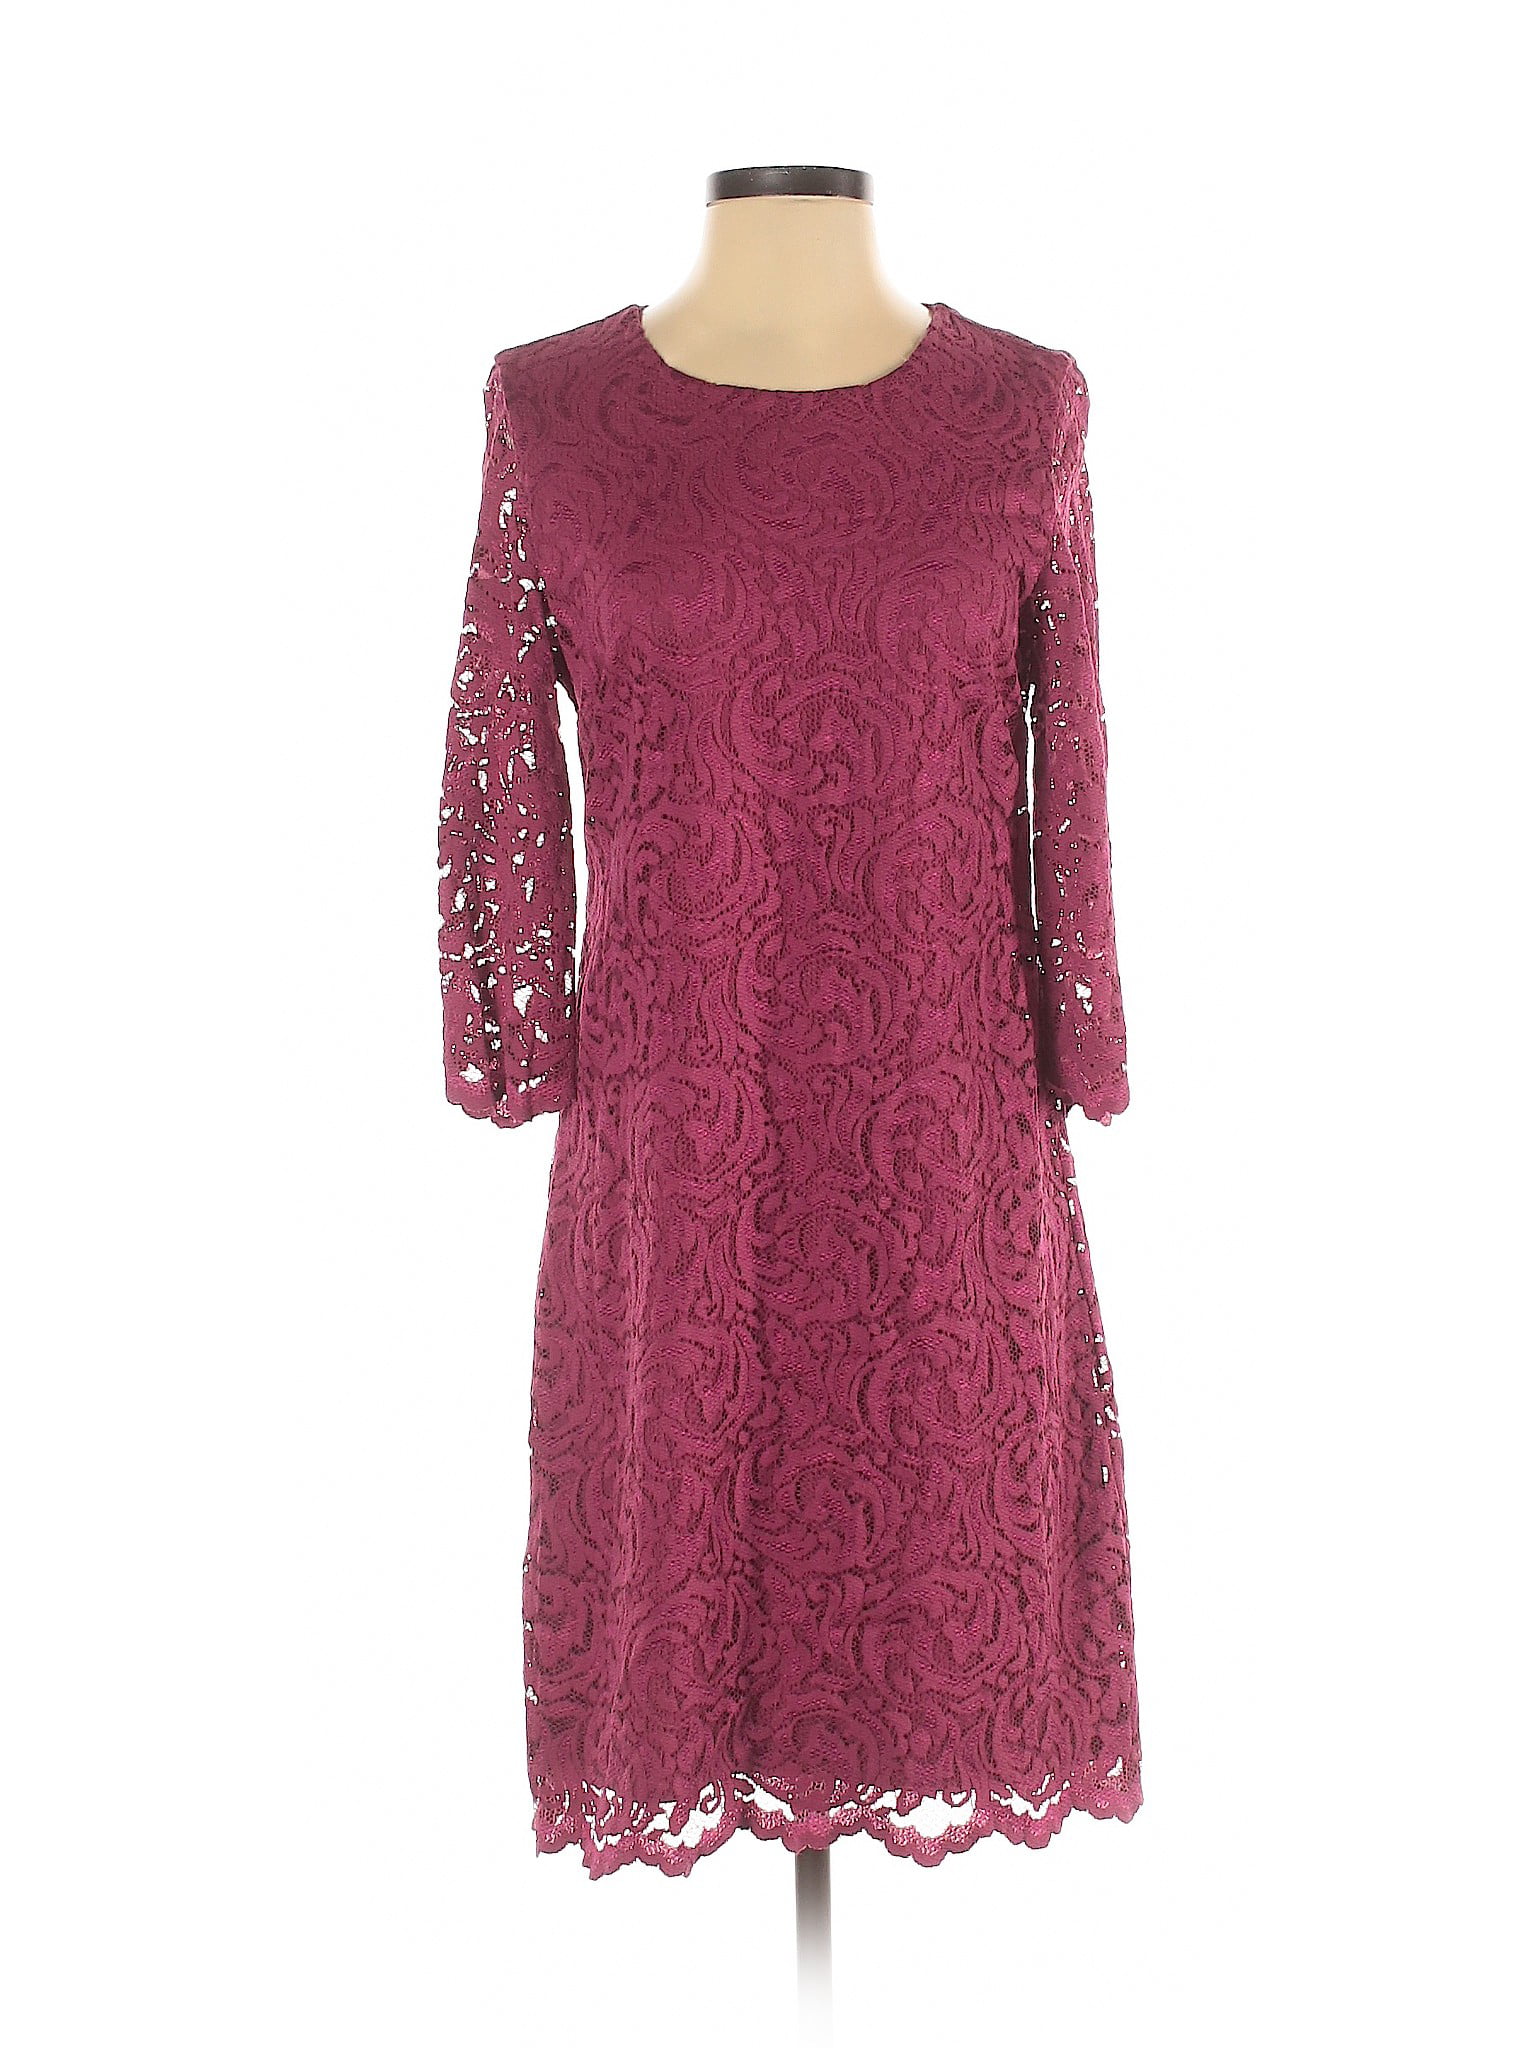 Garnet Hill - Pre-Owned Garnet Hill Women's Size 4 Casual Dress ...